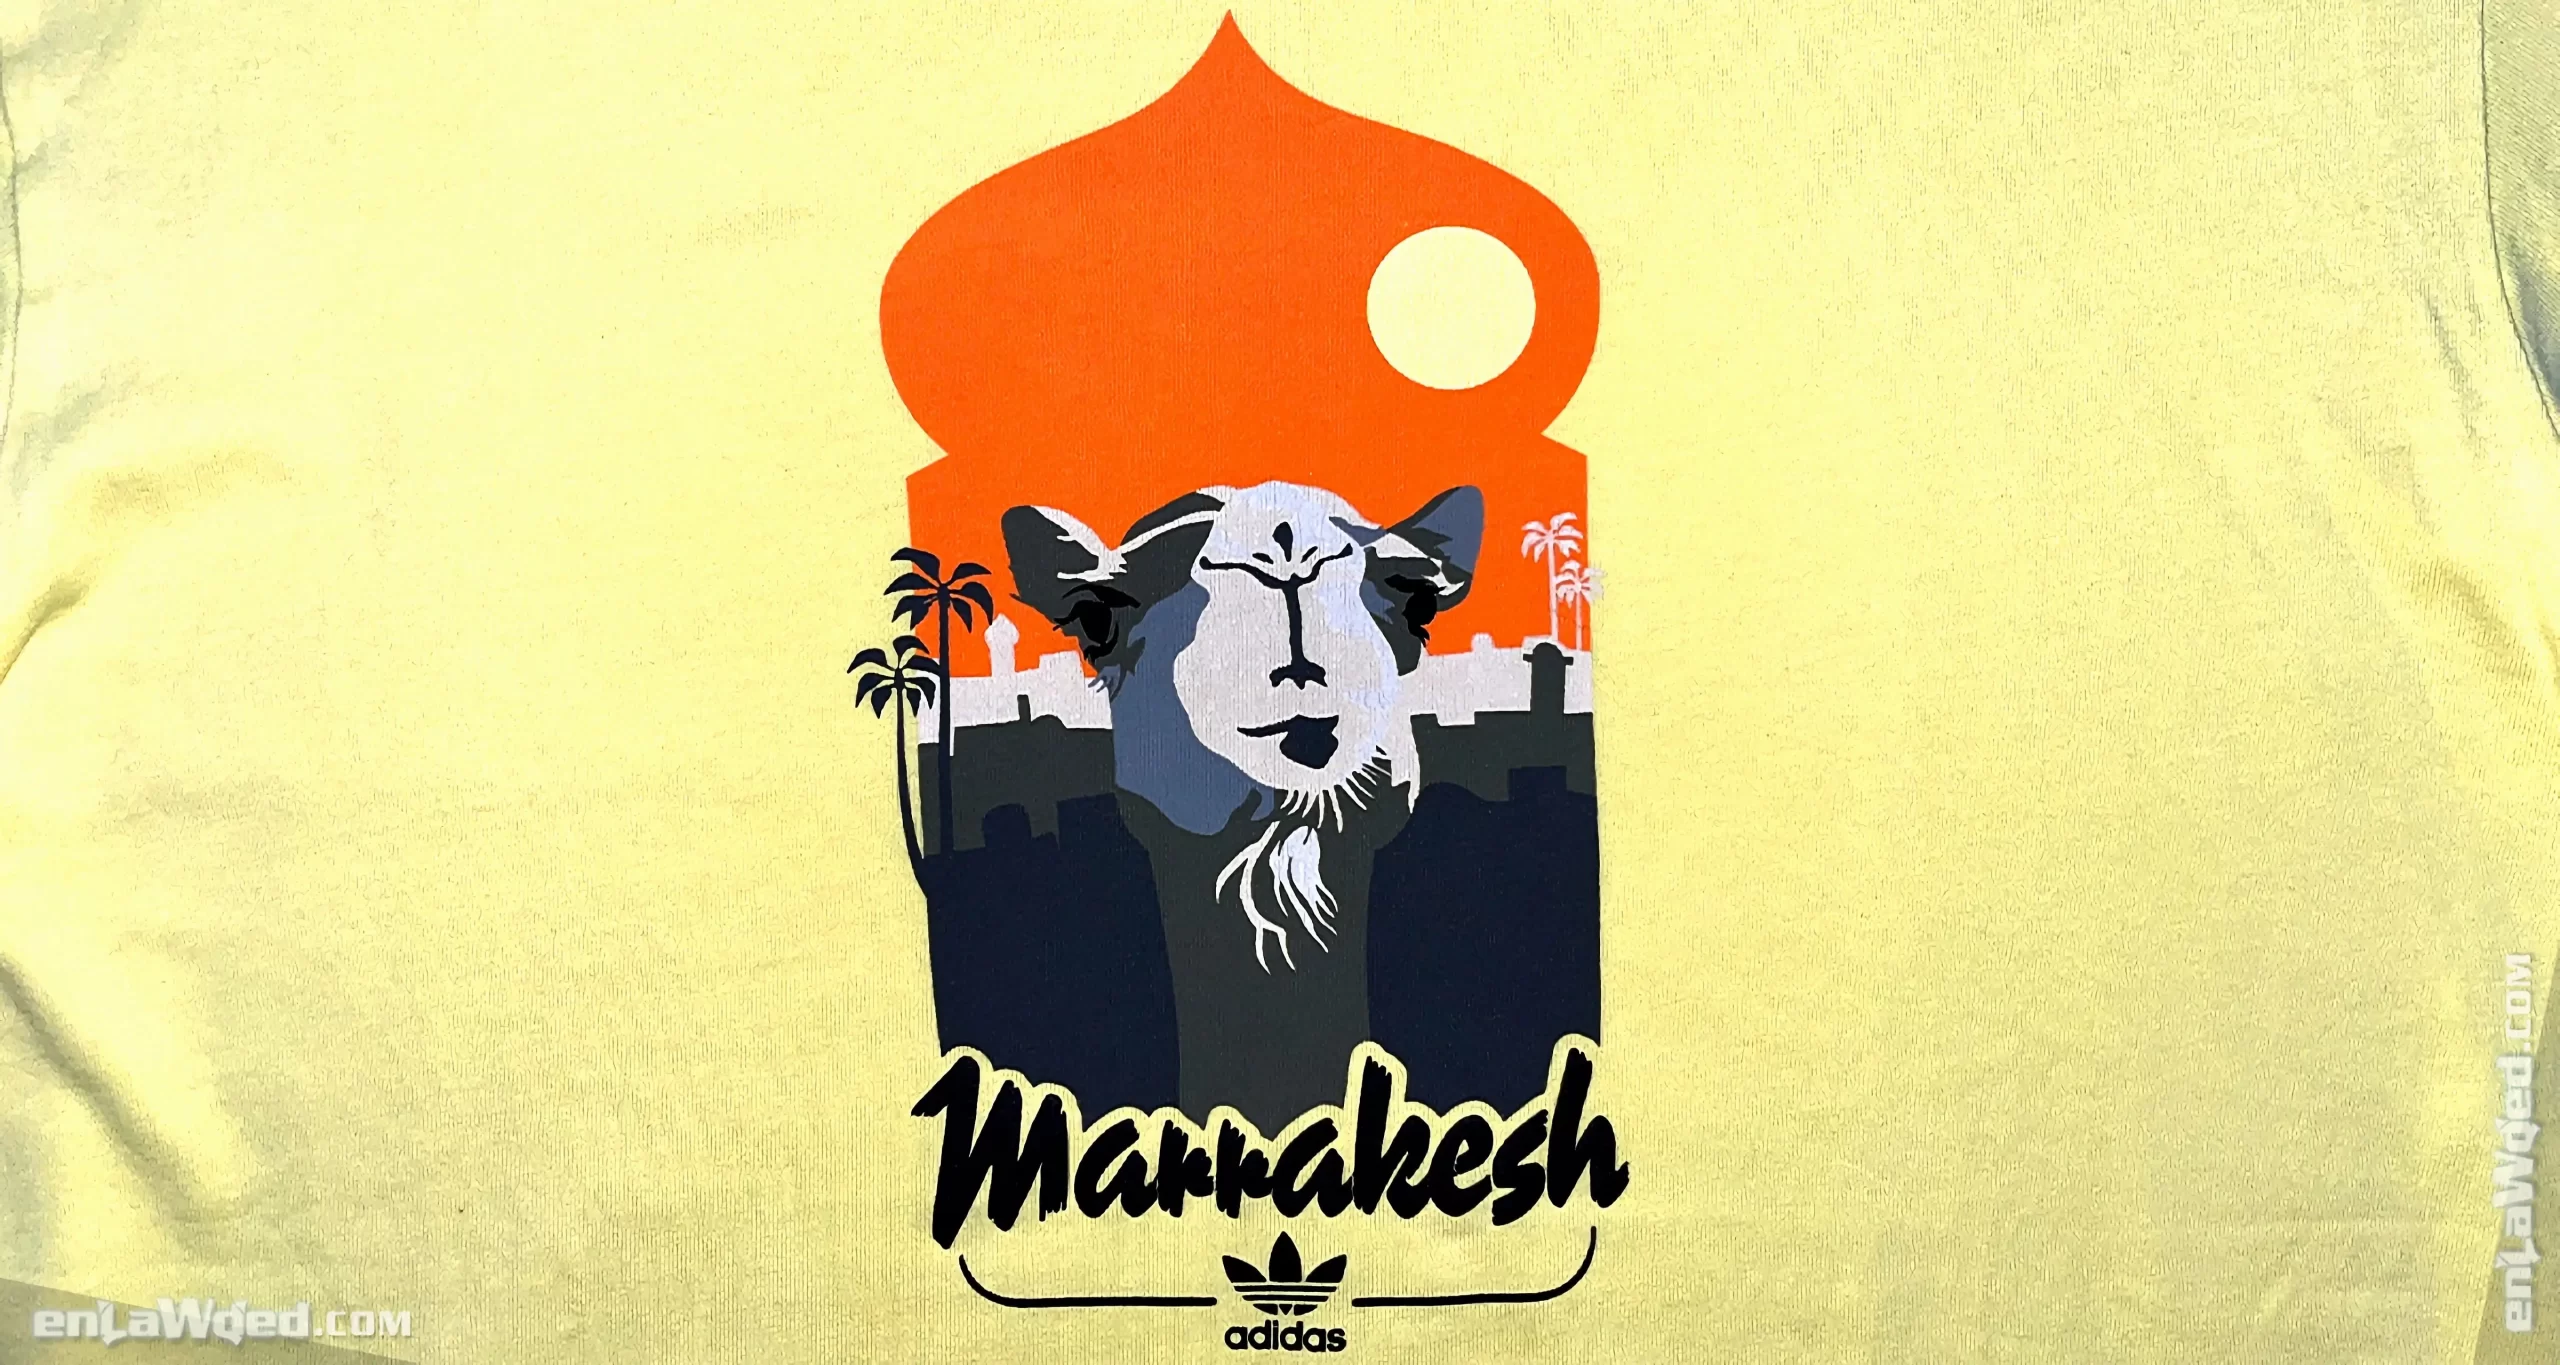 Men’s 2007 Marrakech T-Shirt by Adidas Originals: Light (EnLawded.com file #lmc5ndumjx1aycaquw)